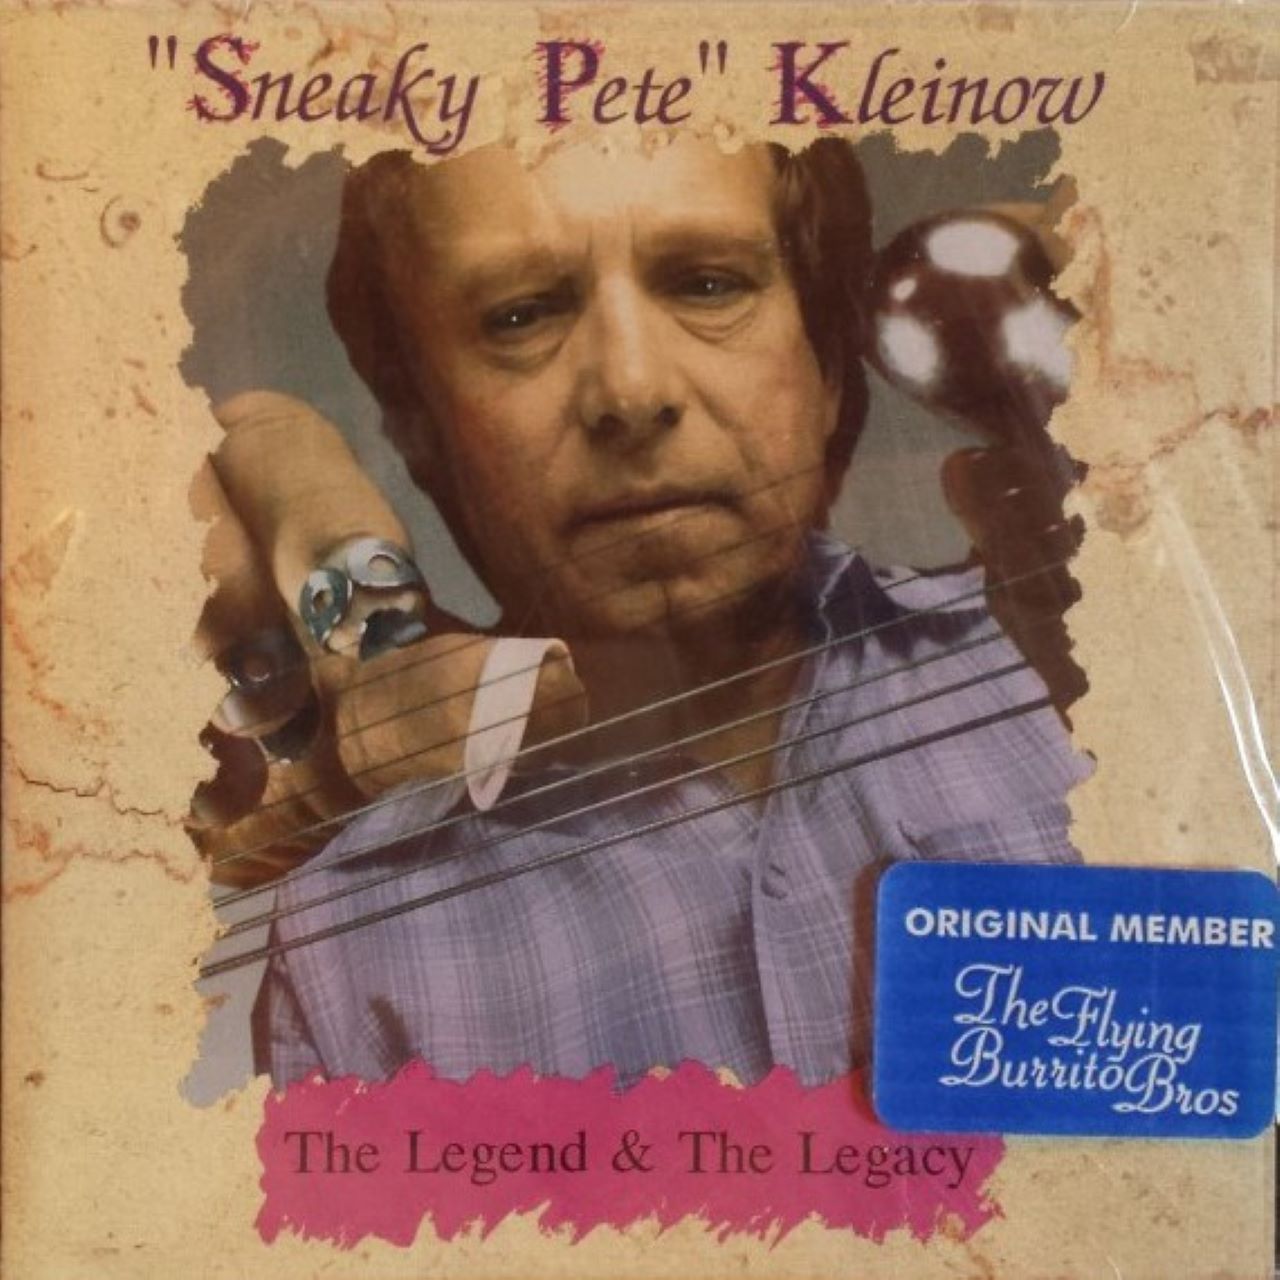 'Sneaky' Pete Kleinow - The Legend & The Legacy cover album